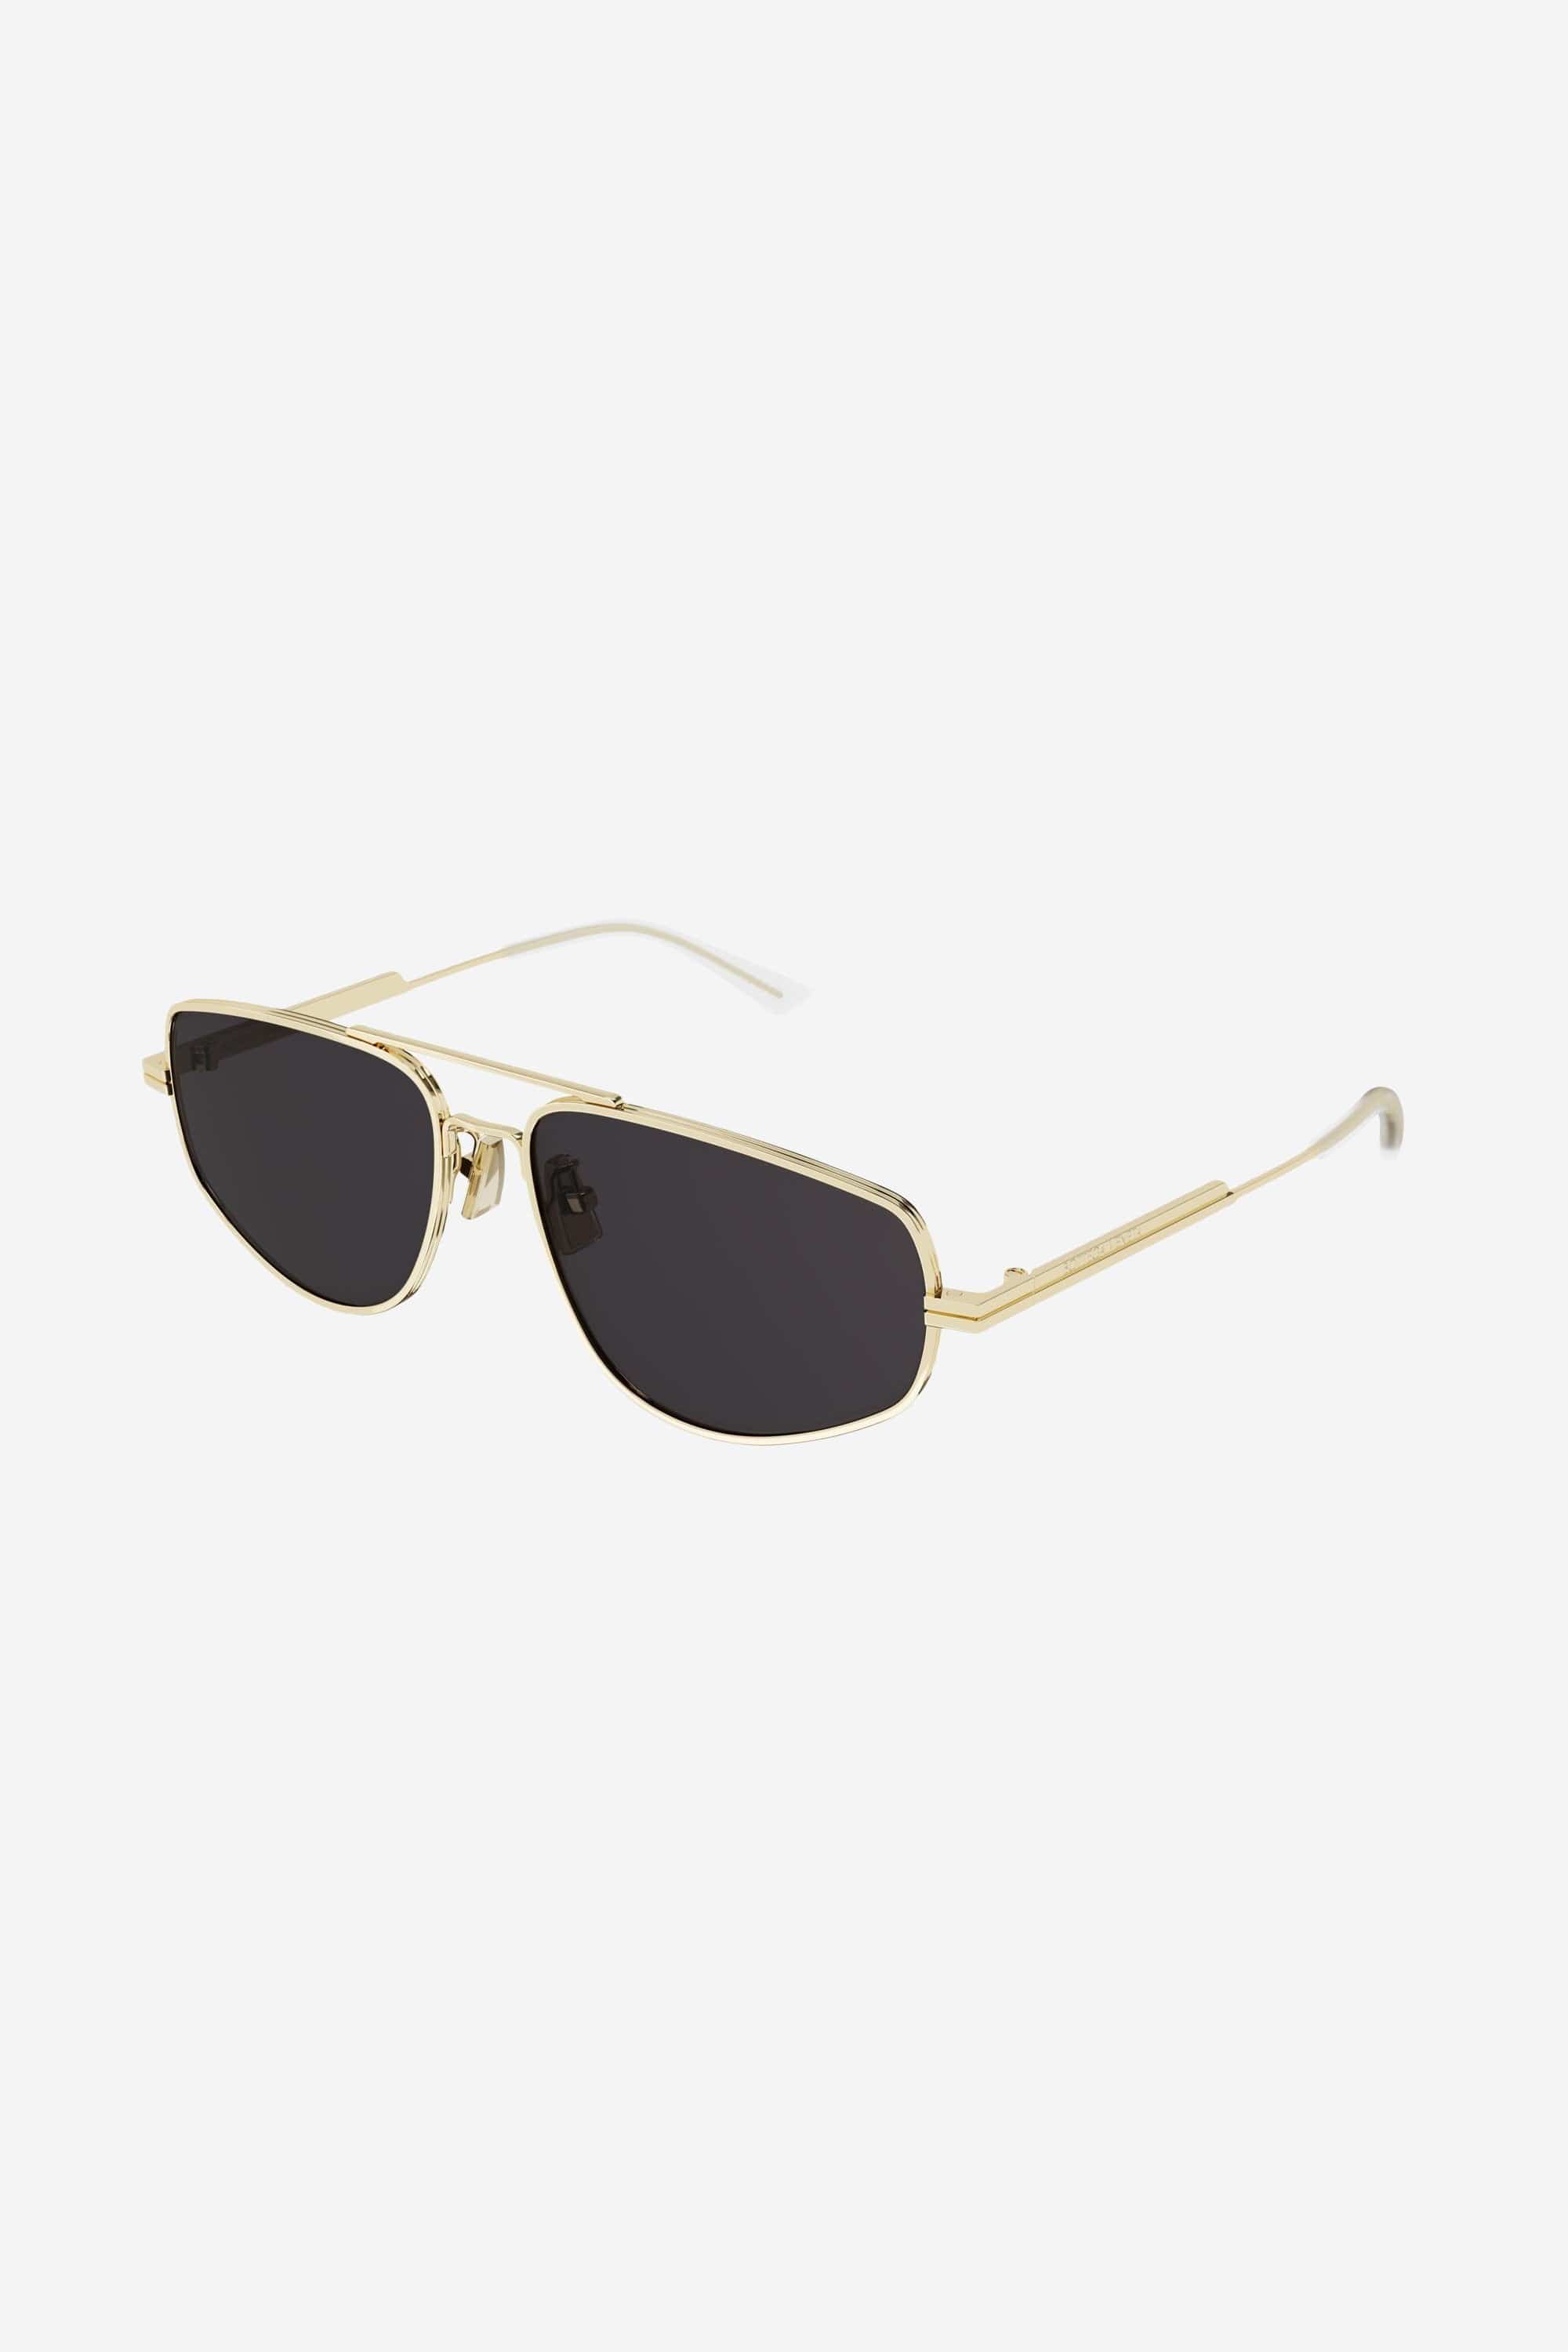 Bottega Veneta full metal light caravan sunglasses - Eyewear Club